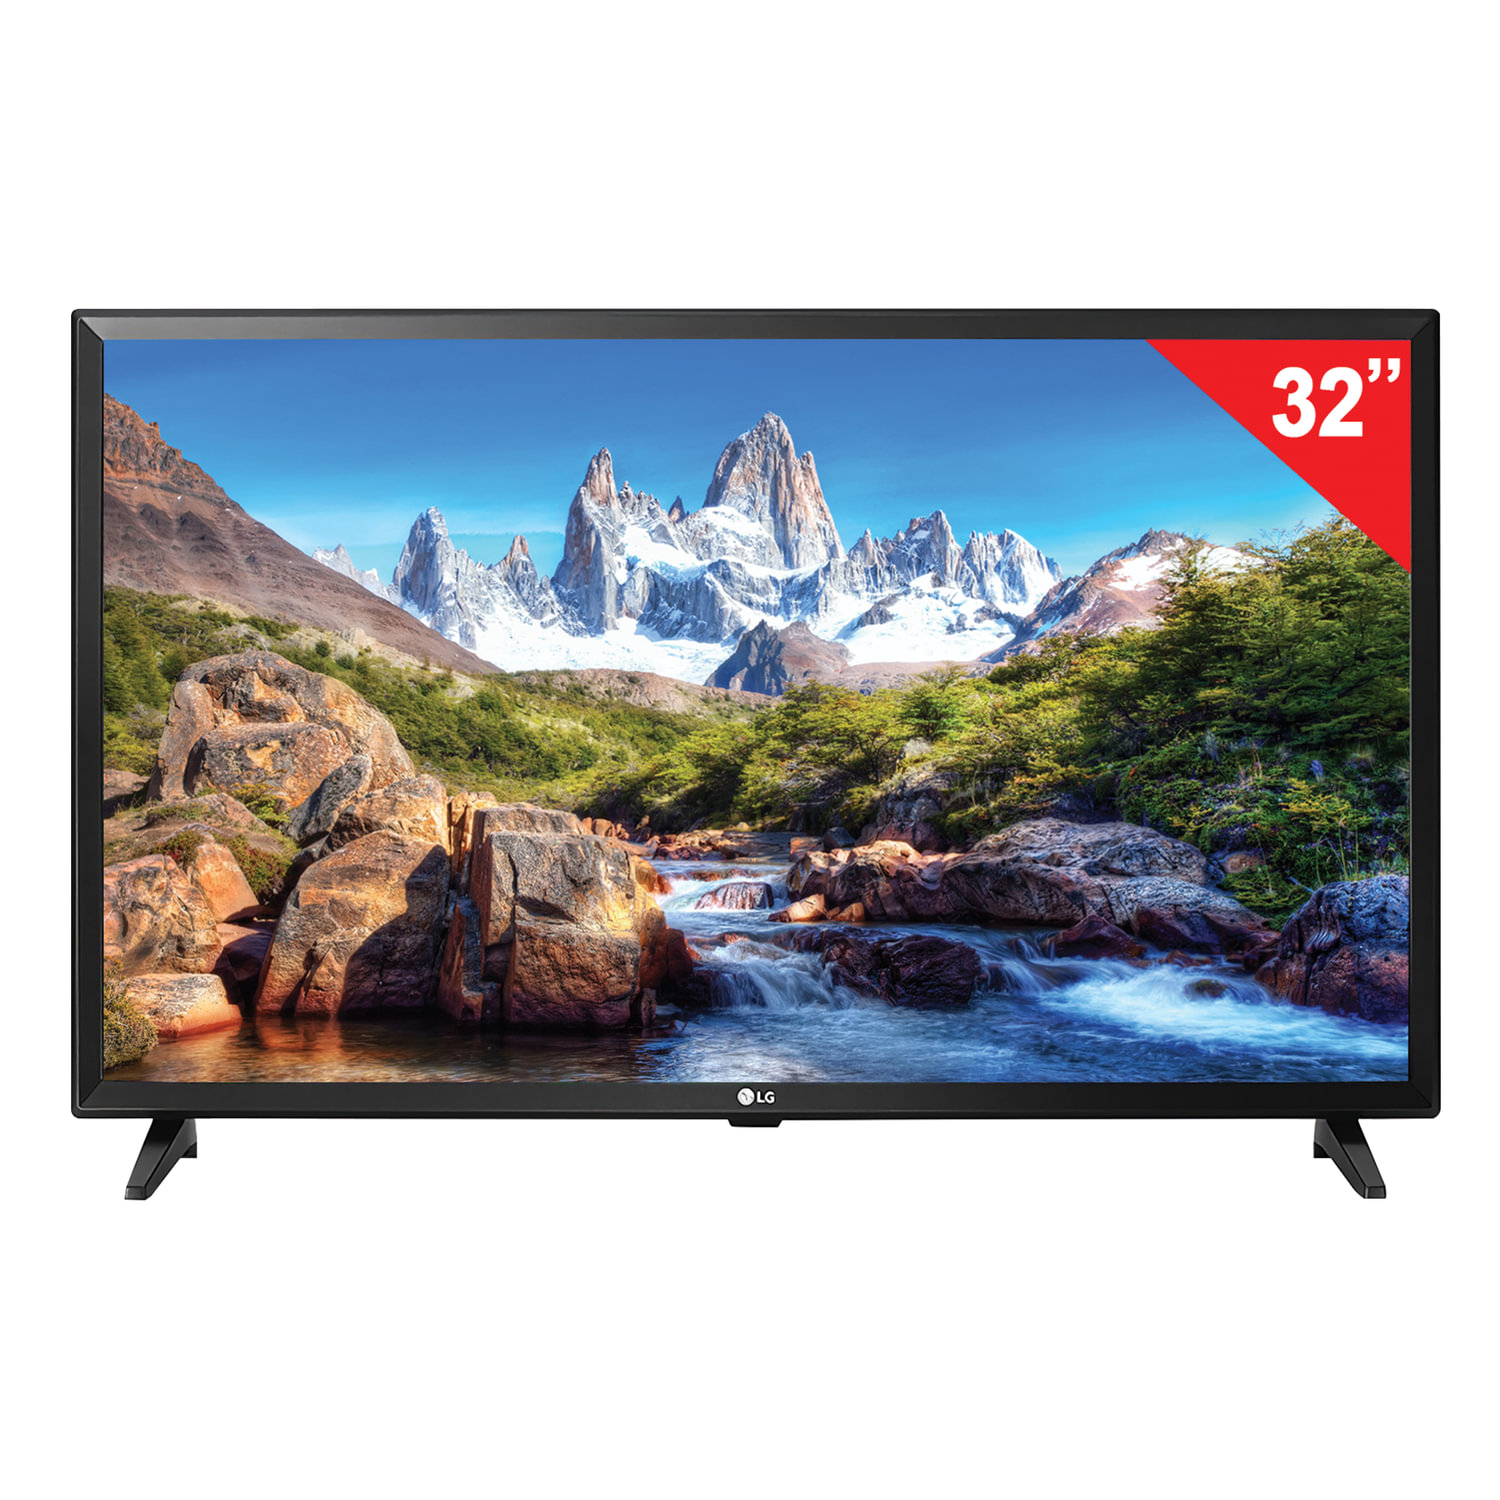 Телевизор lg 32 см. Телевизор LG 32lj510u. LG телевизоры 43 дюйма смарт. LG 32lj510u 2017 led. Телевизор LG Smart TV 32 дюйма.